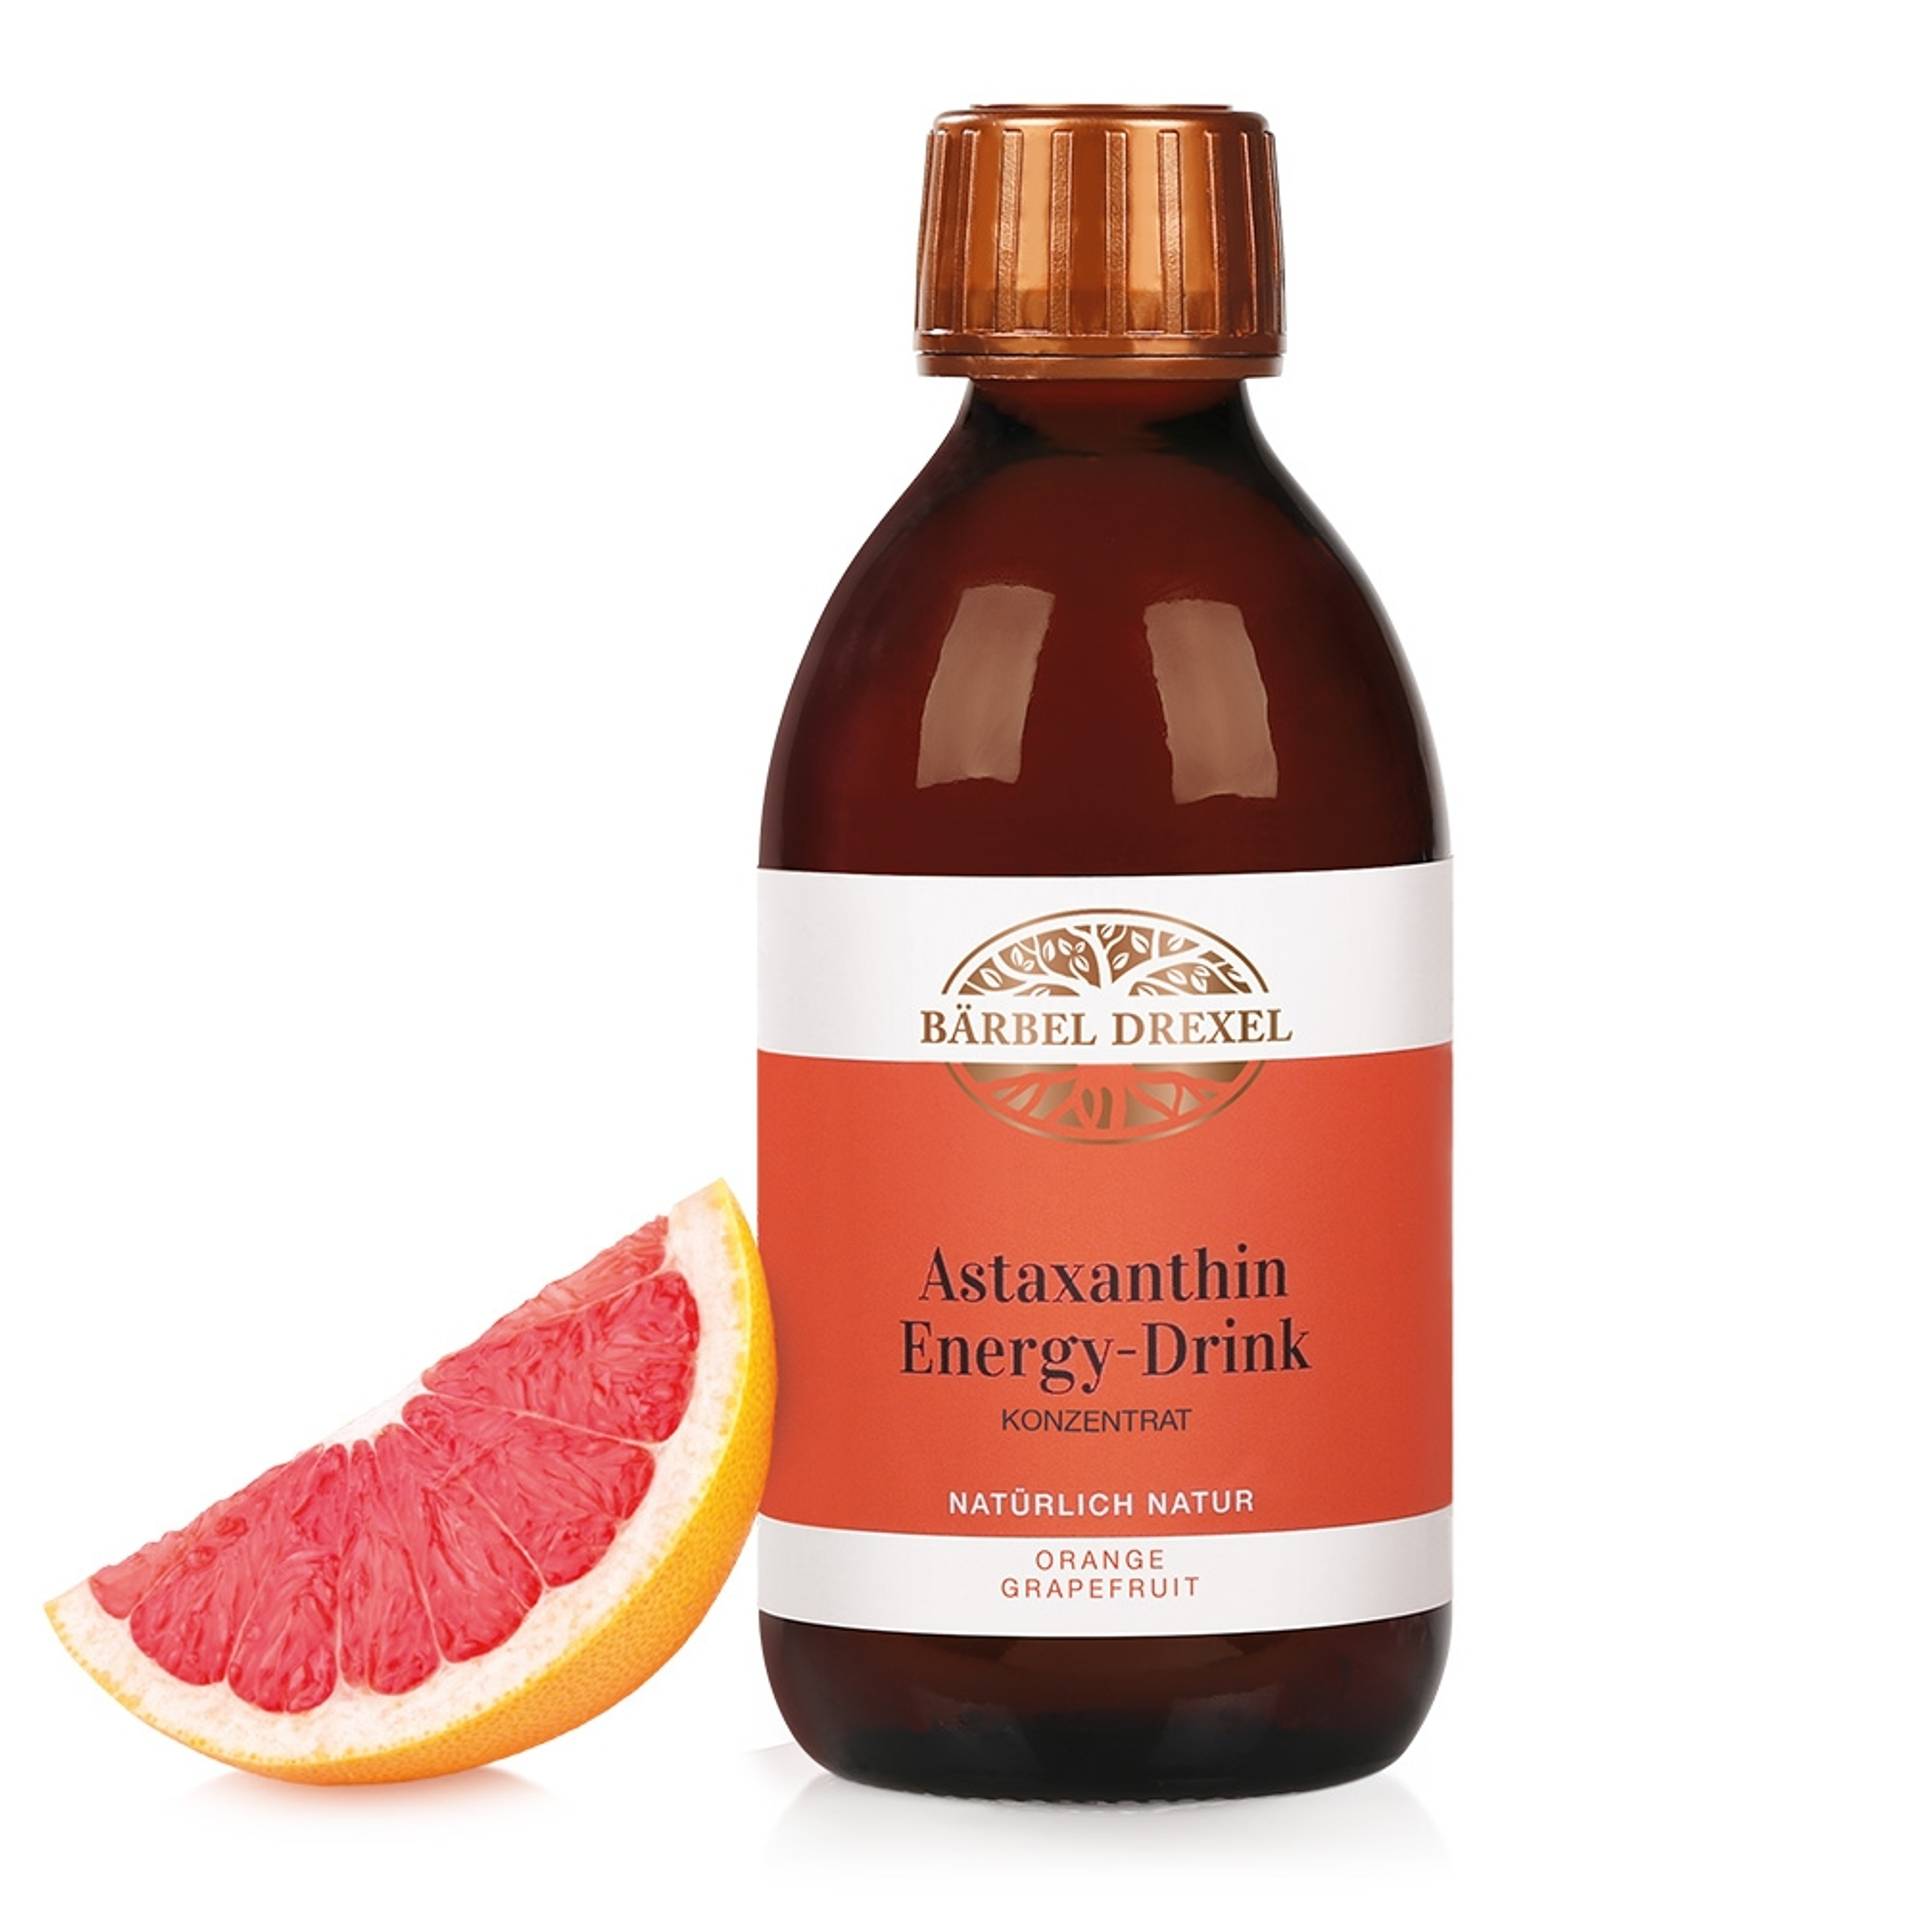 astaxanthin-energy-drink-orange-grapefruit-mit-deko-links_1.jpg